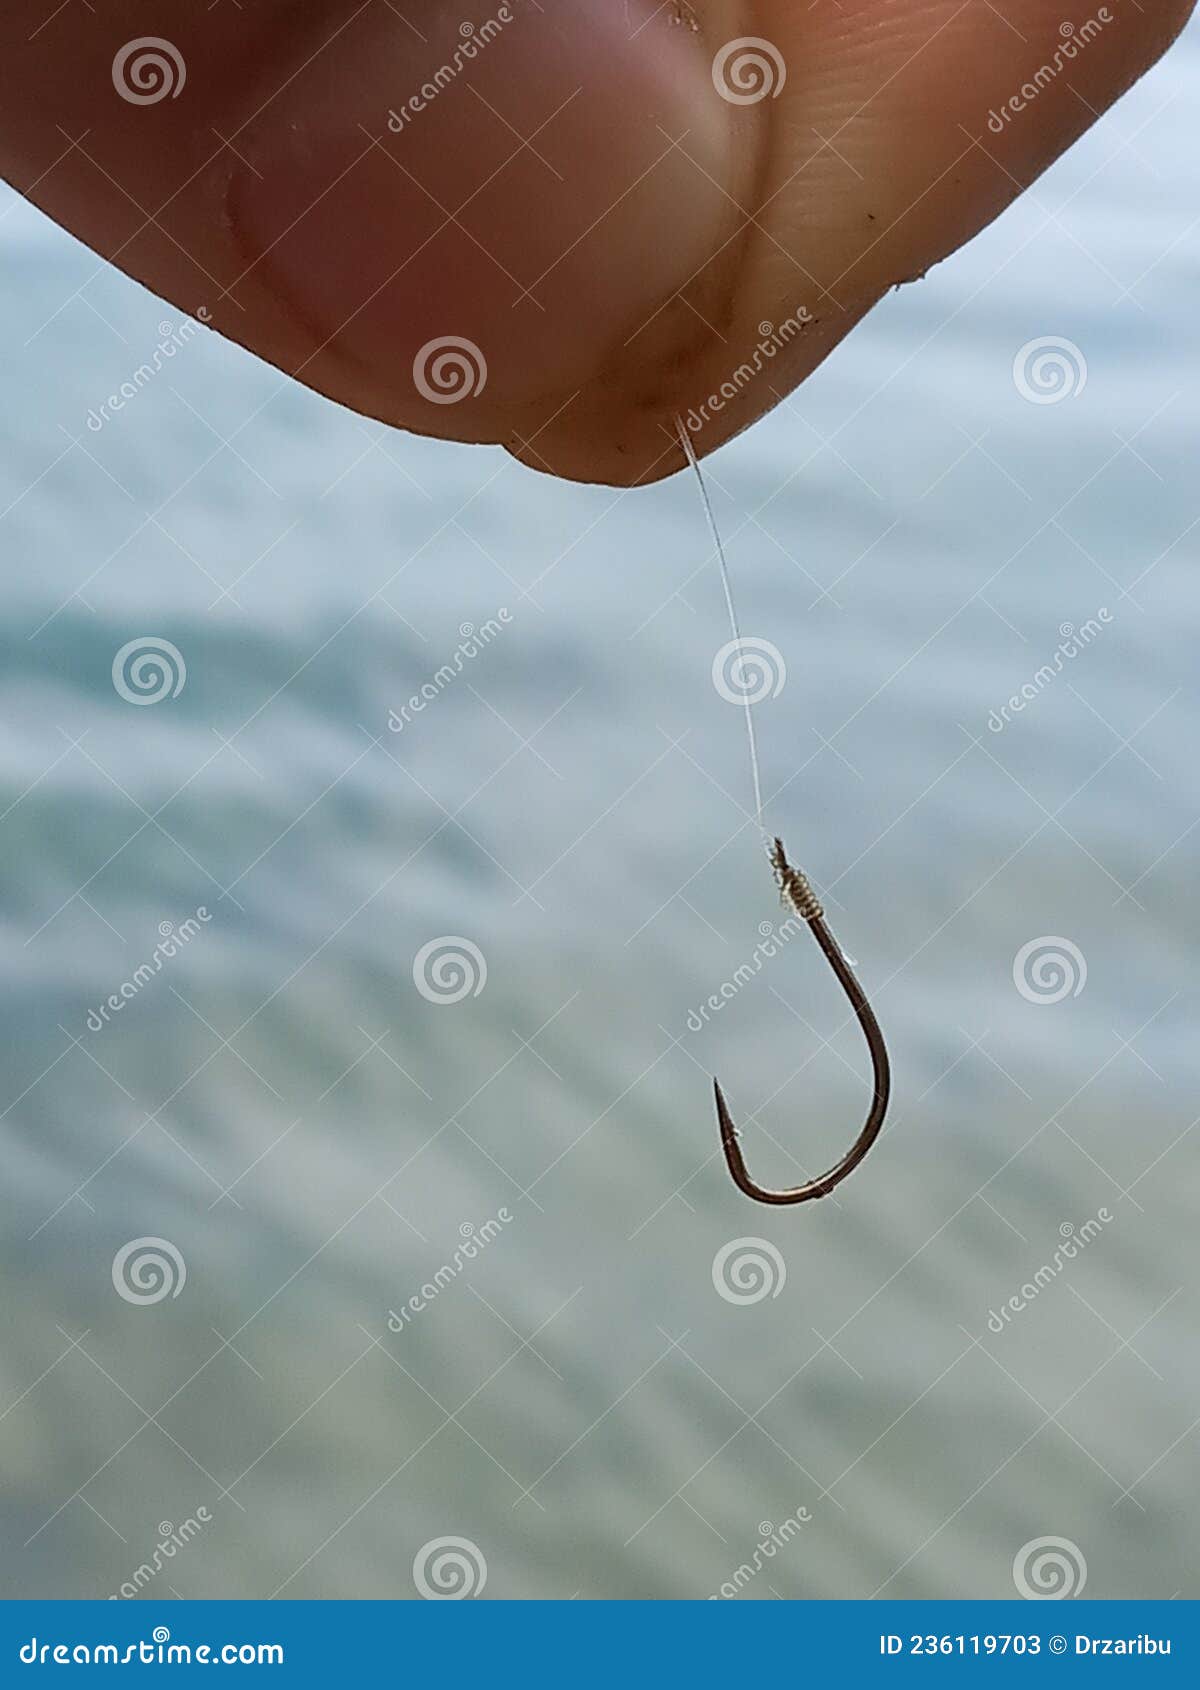 https://thumbs.dreamstime.com/z/small-fishing-hook-236119703.jpg